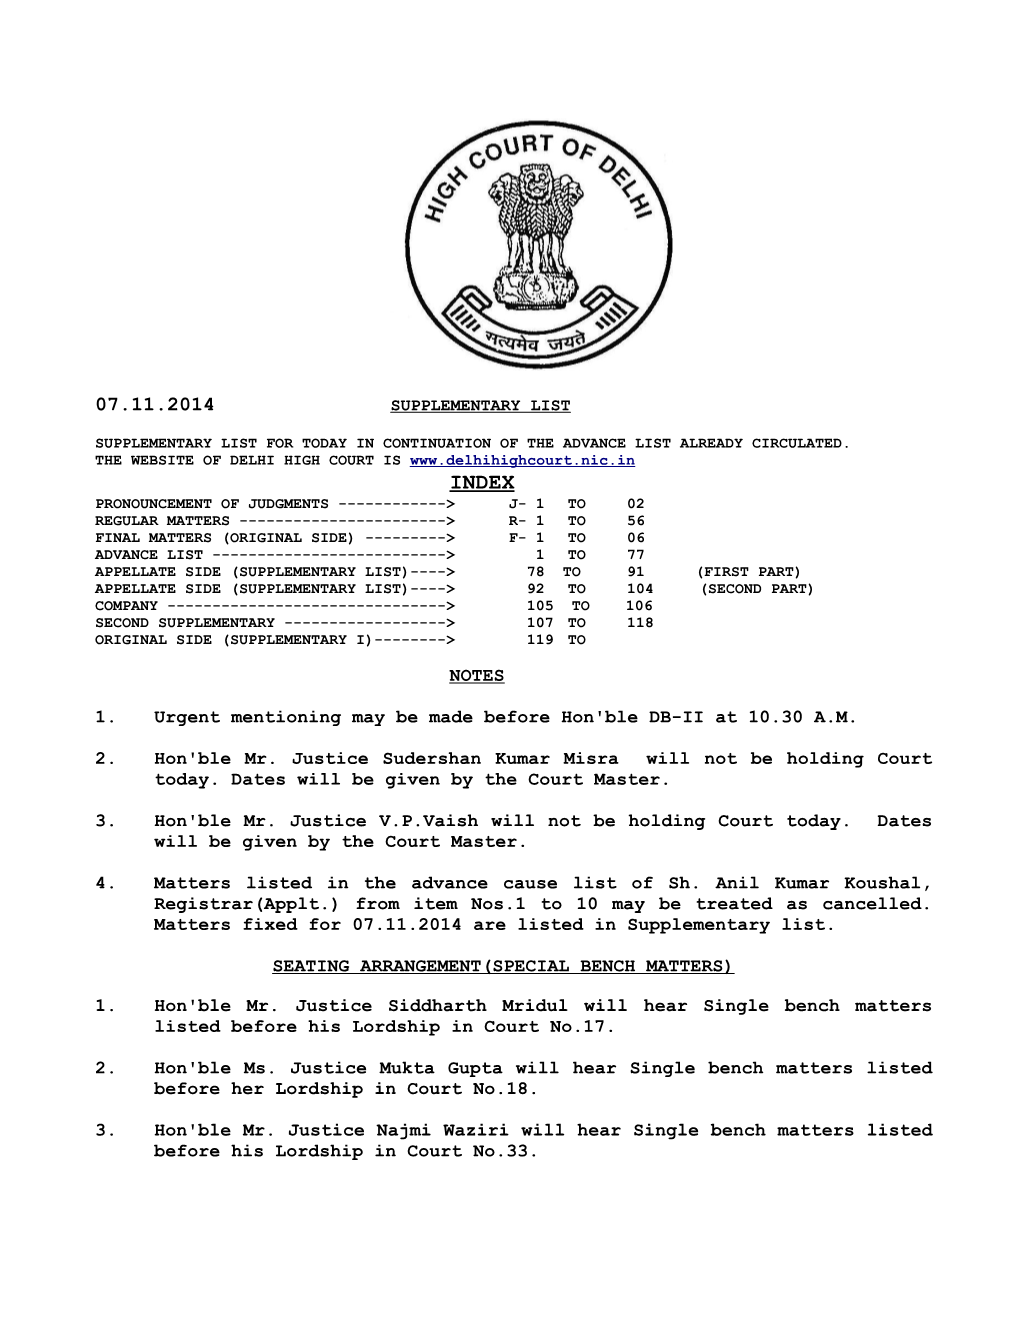 NOTES 1. Urgent Mentioning May Be Made Before Hon'ble DB-II at 10.30 A.M. 2. Hon'ble Mr. Justice Sudershan Kumar Misra Will